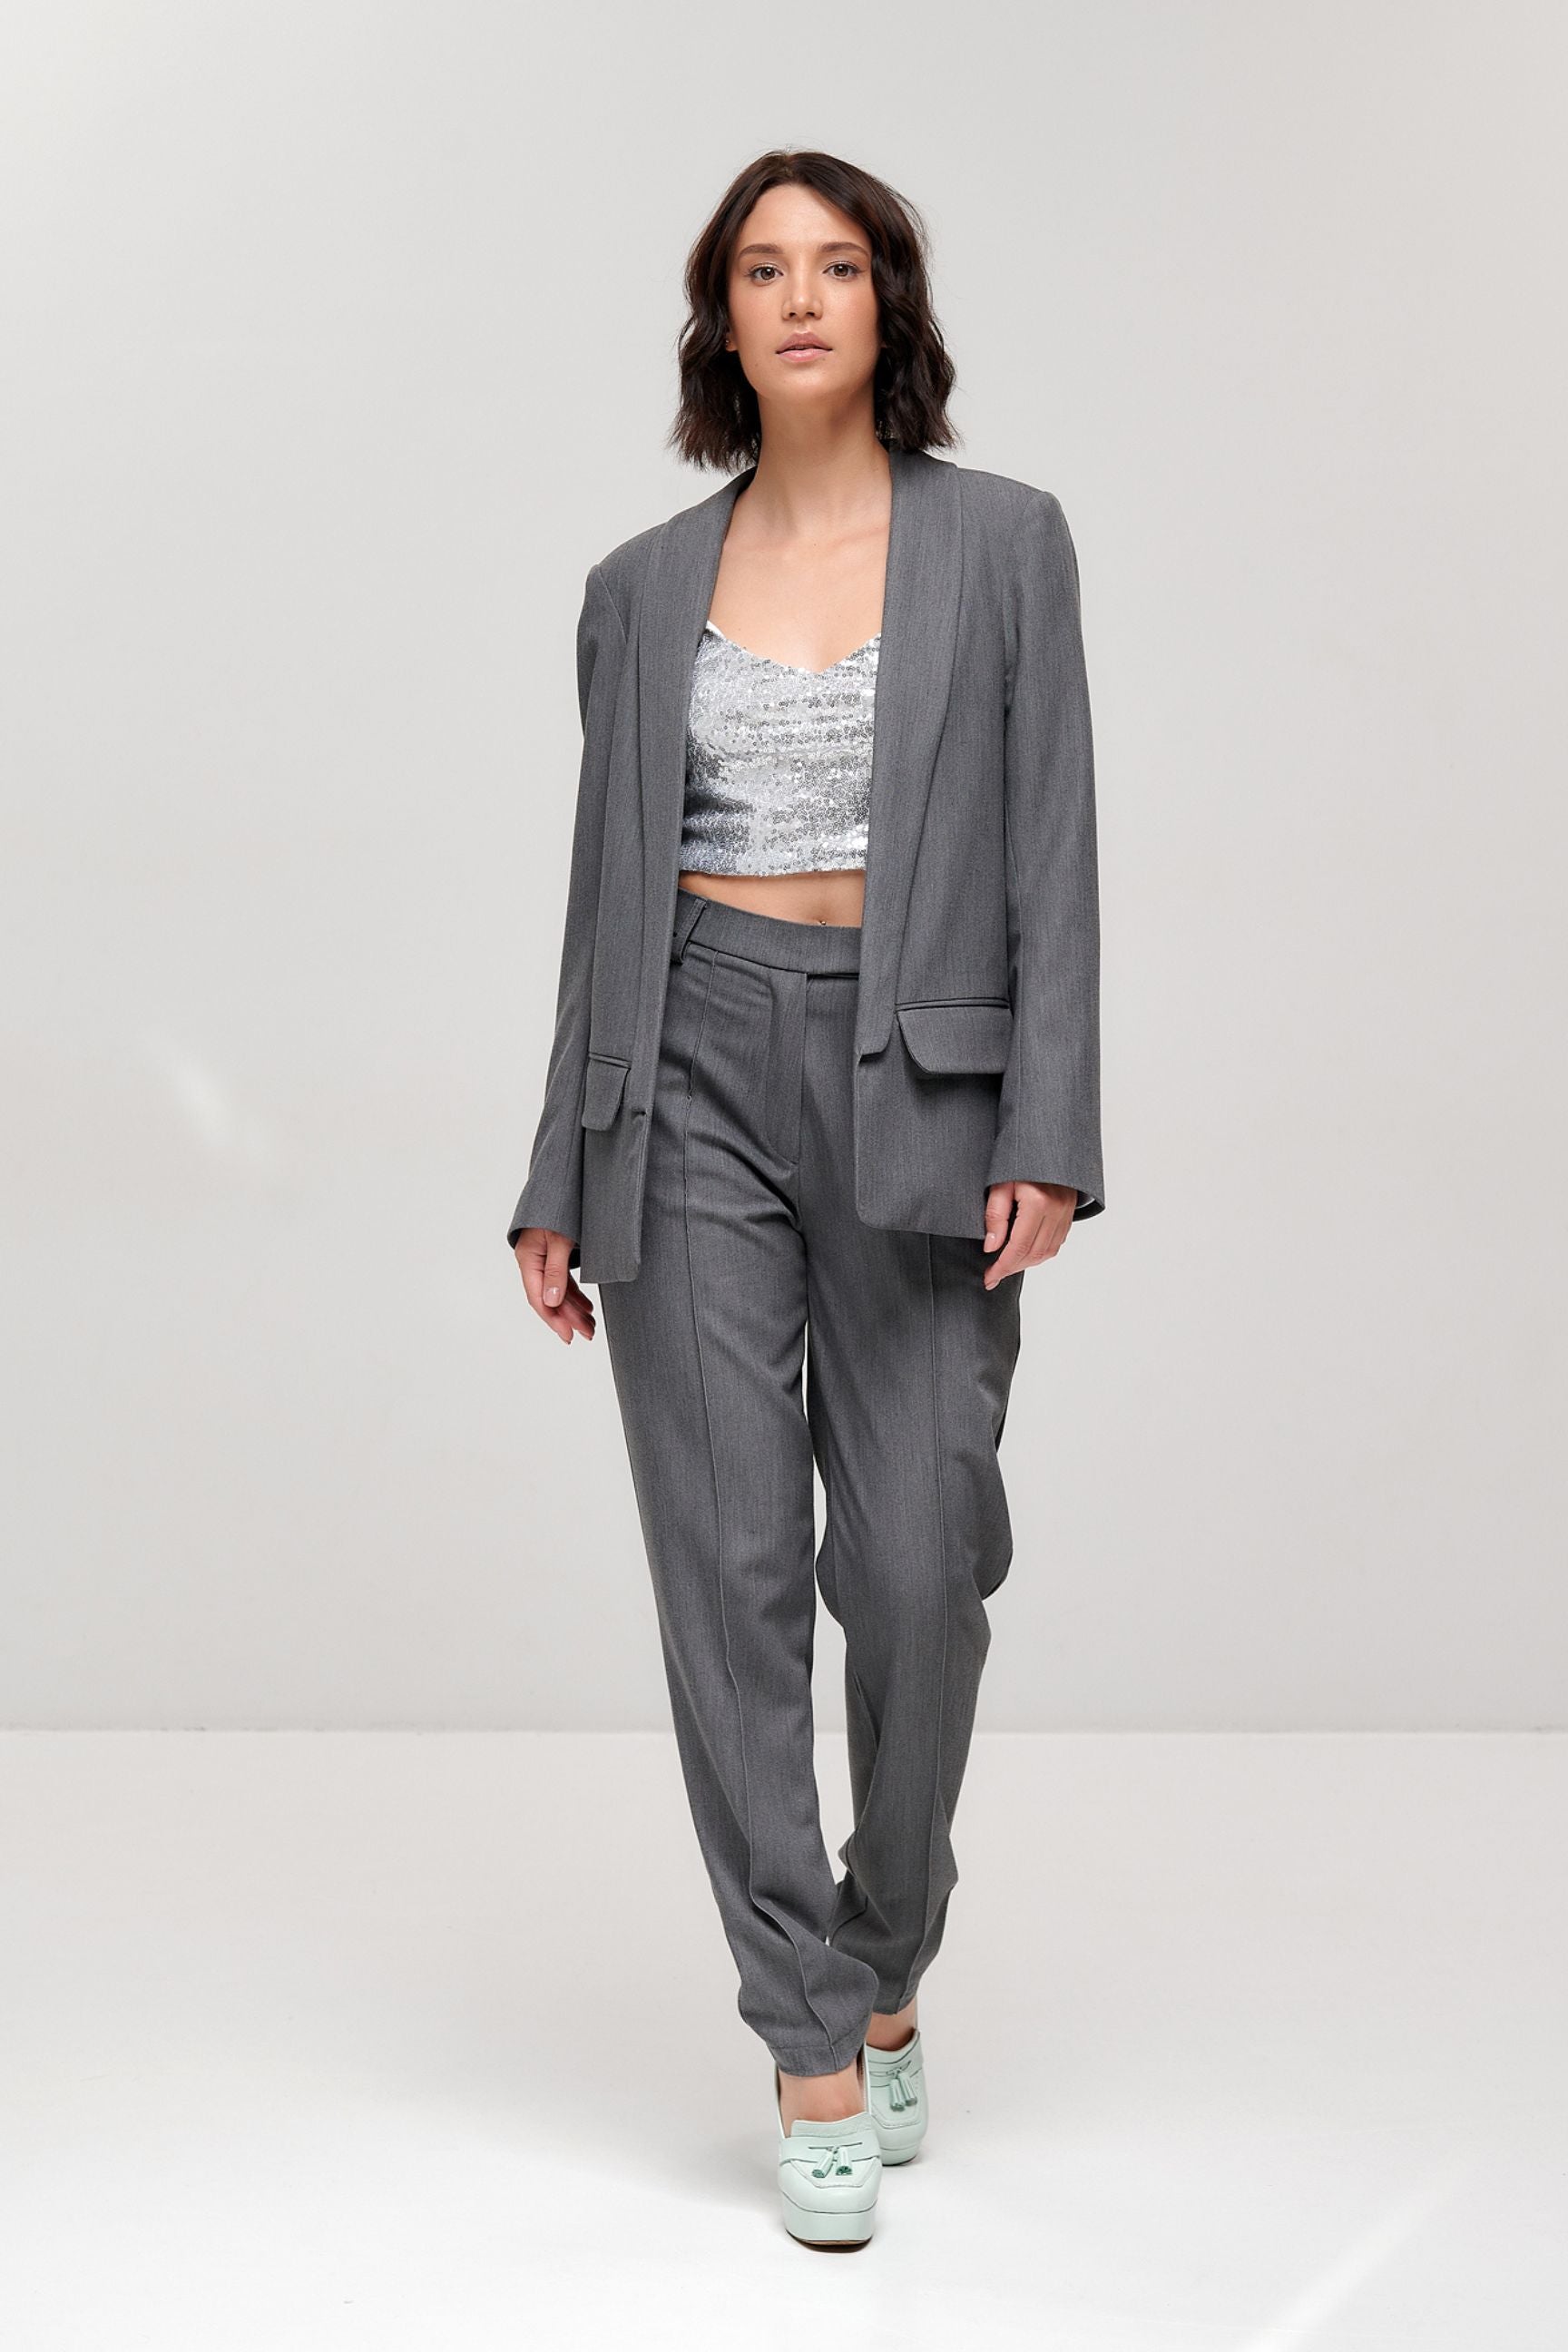 Formal Suit for Women, Open Front Blazer & Pants Suit, Business Suit without Buttons